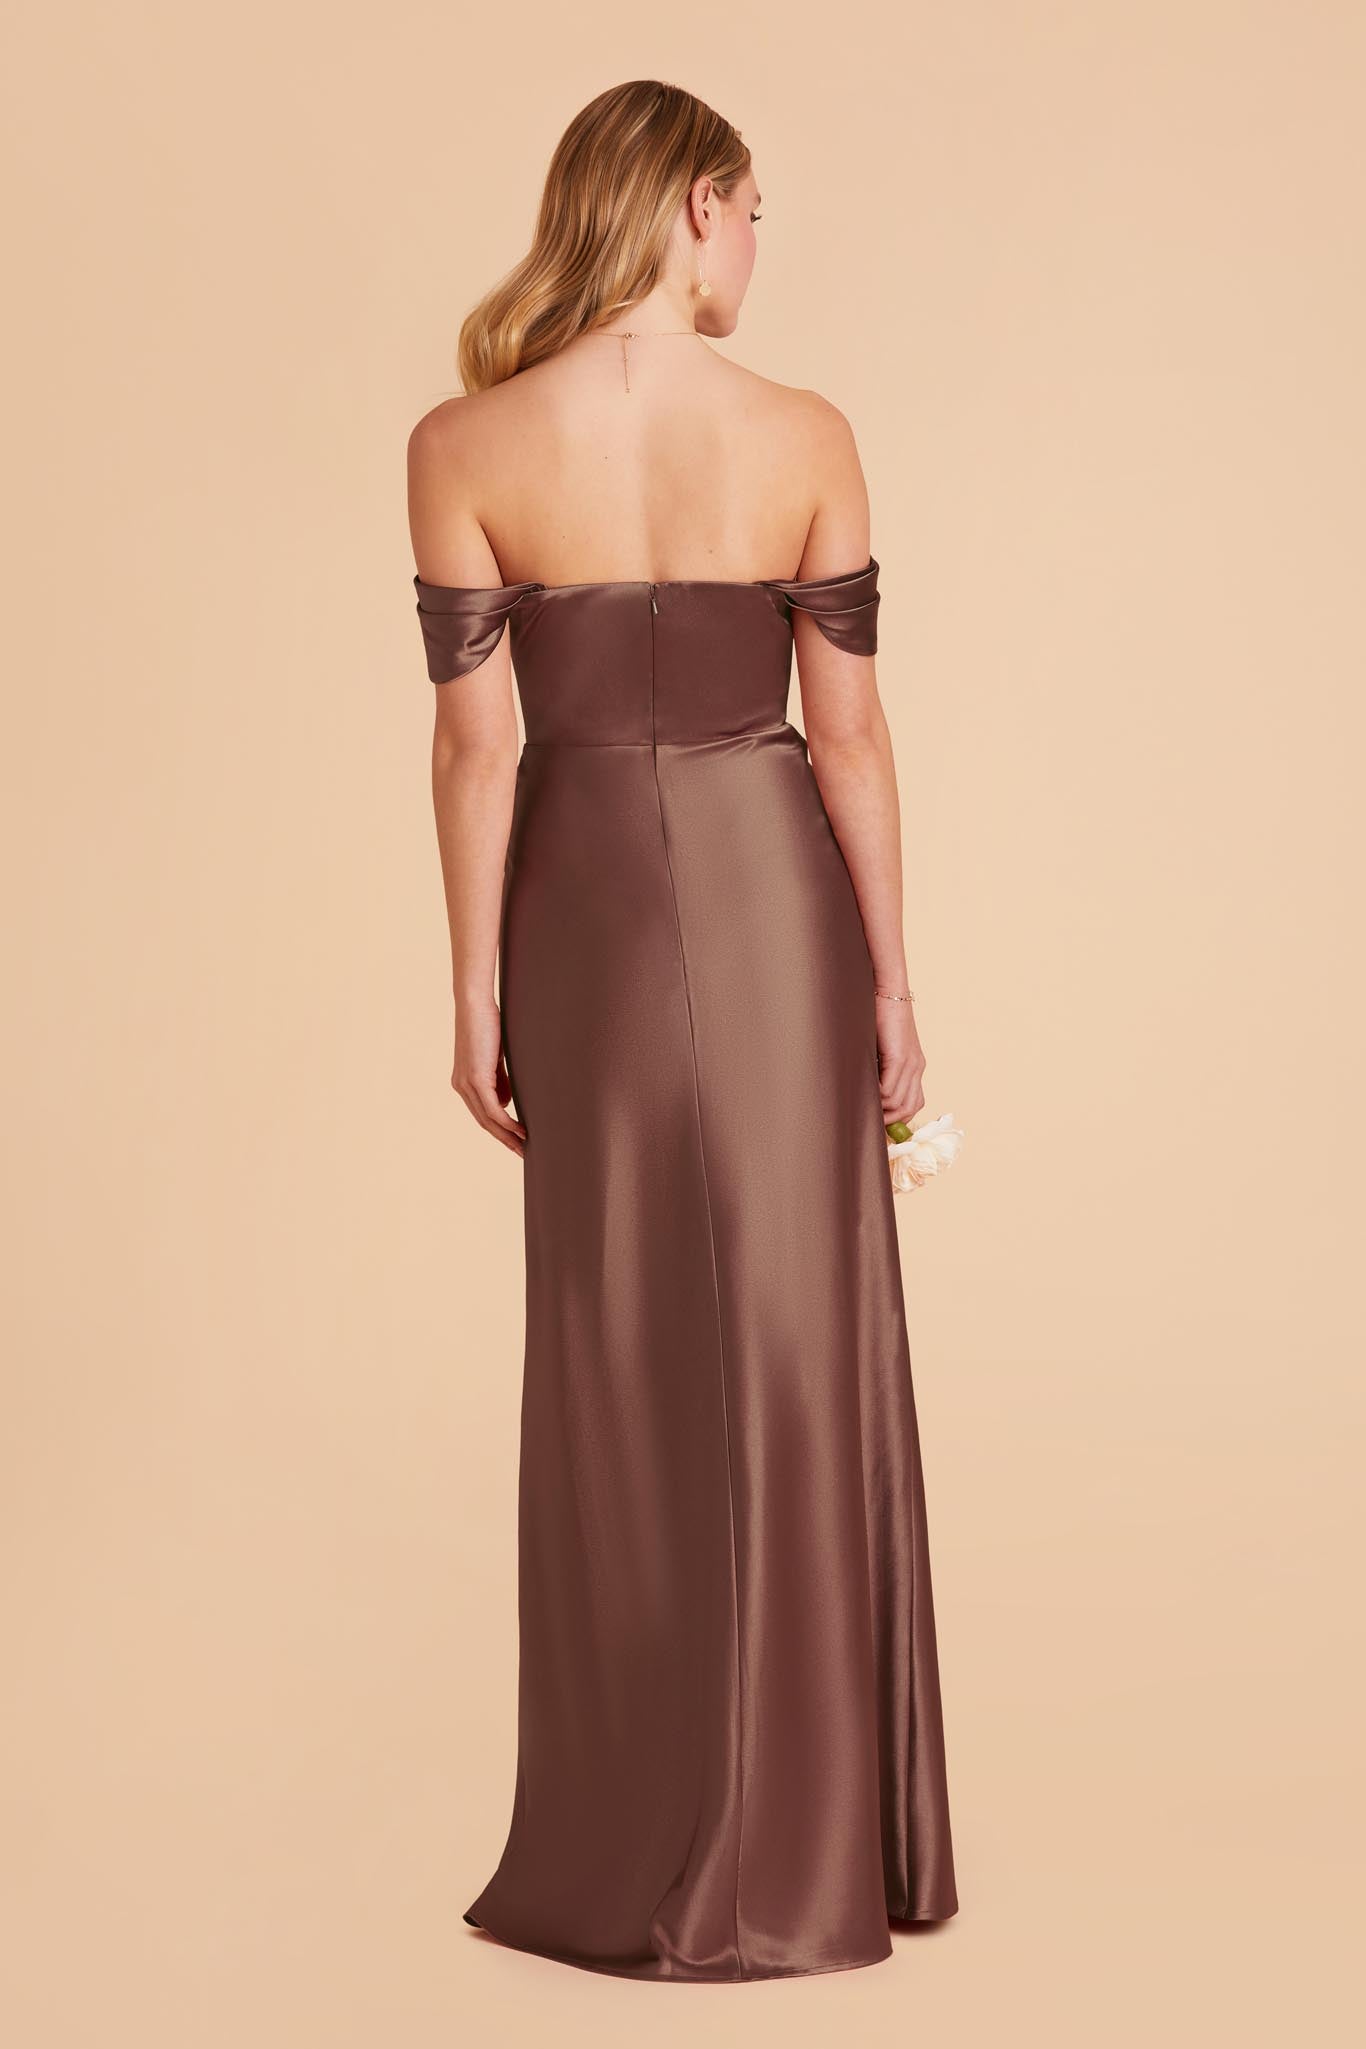 Chocolate Brown Mia Convertible Dress by Birdy Grey